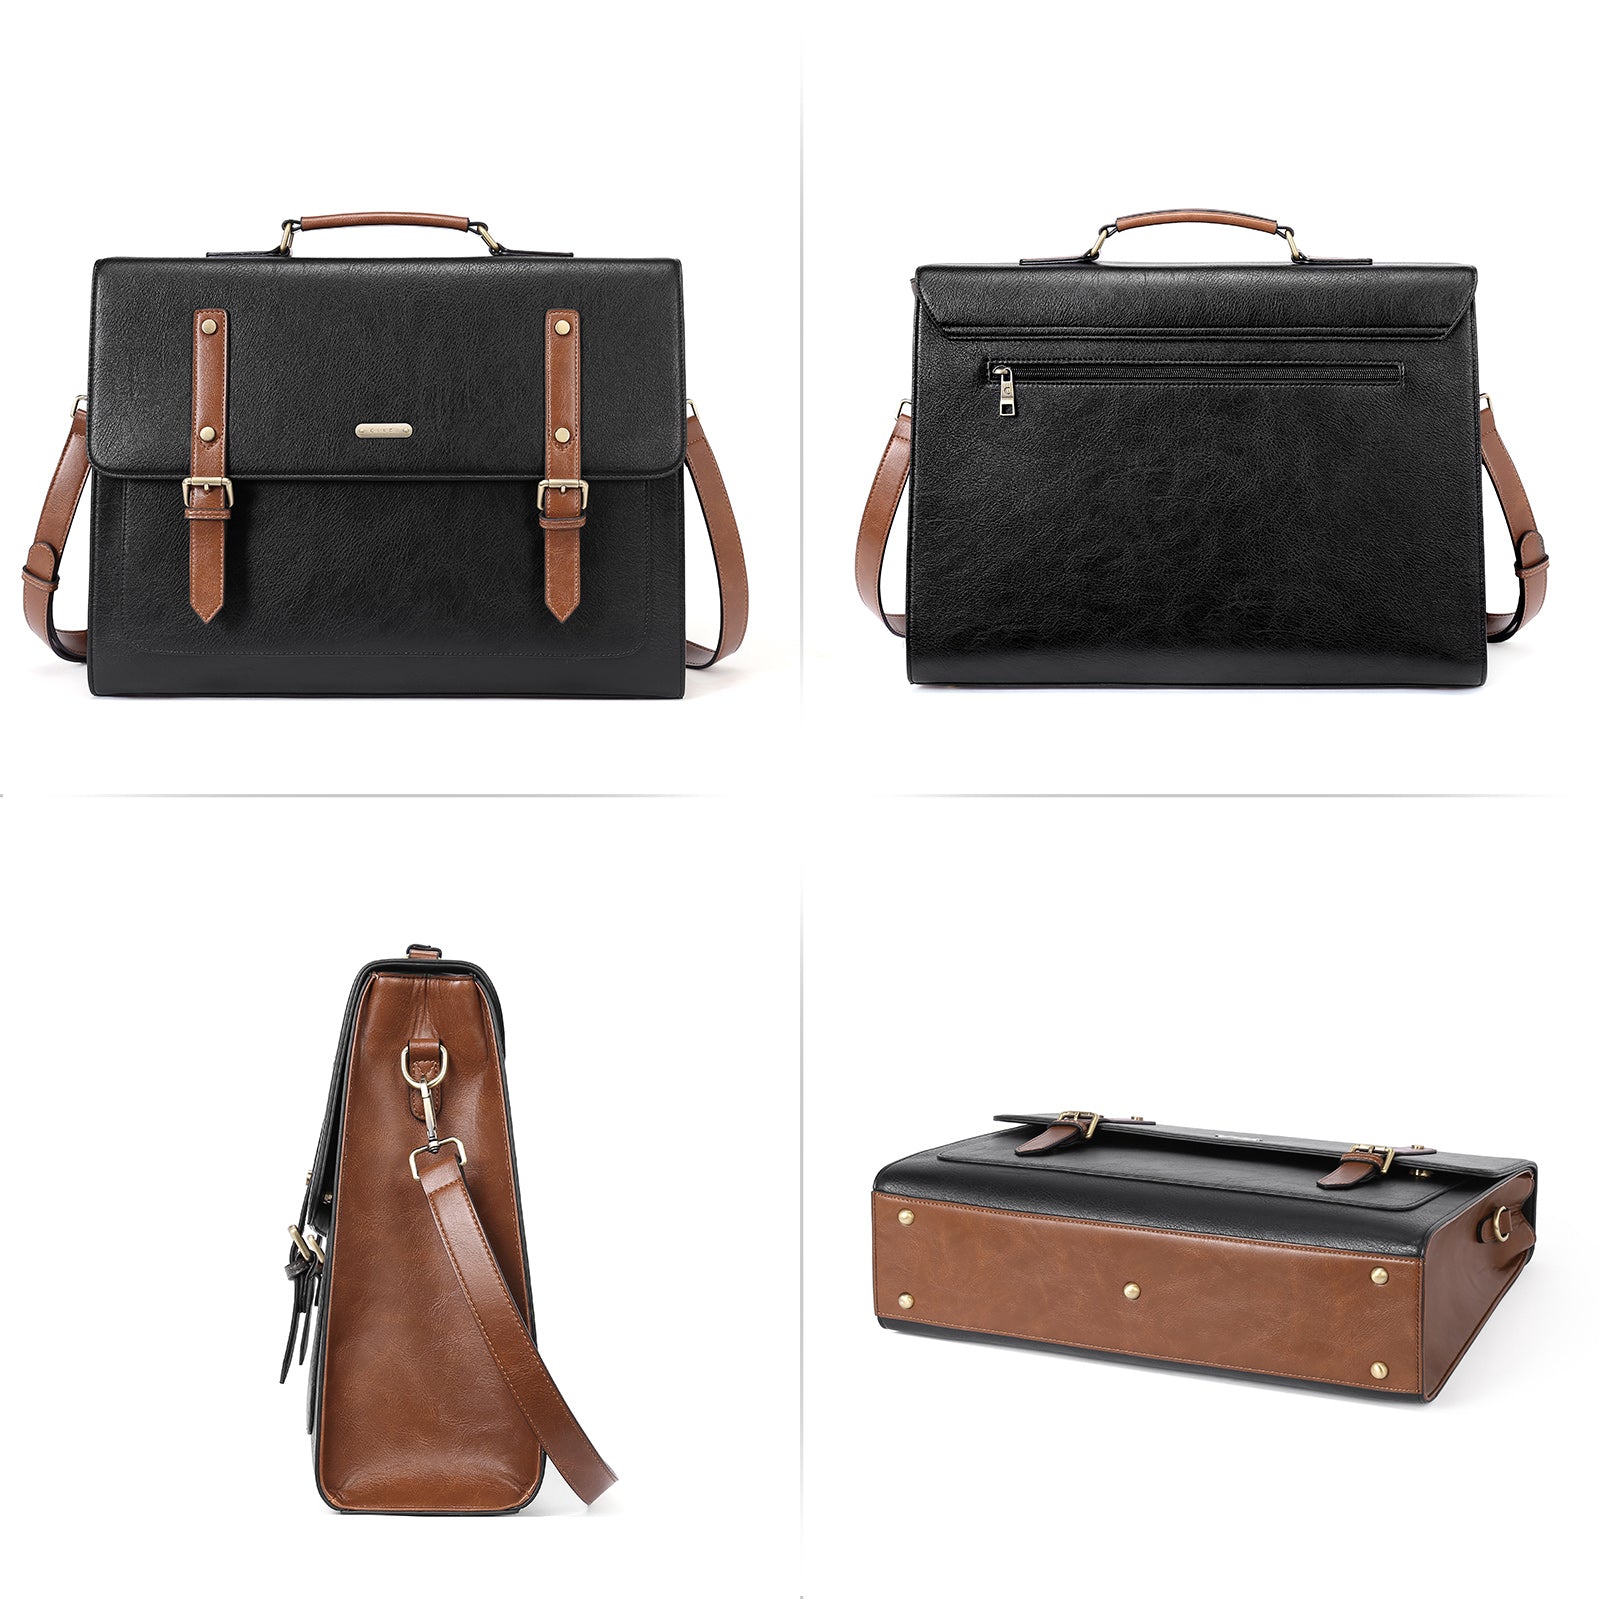 CLUCI Laptop Messenger Bag PU Leather Women Briefcase Business Professional Work College 15.6 inch Laptop Satchel Handbags